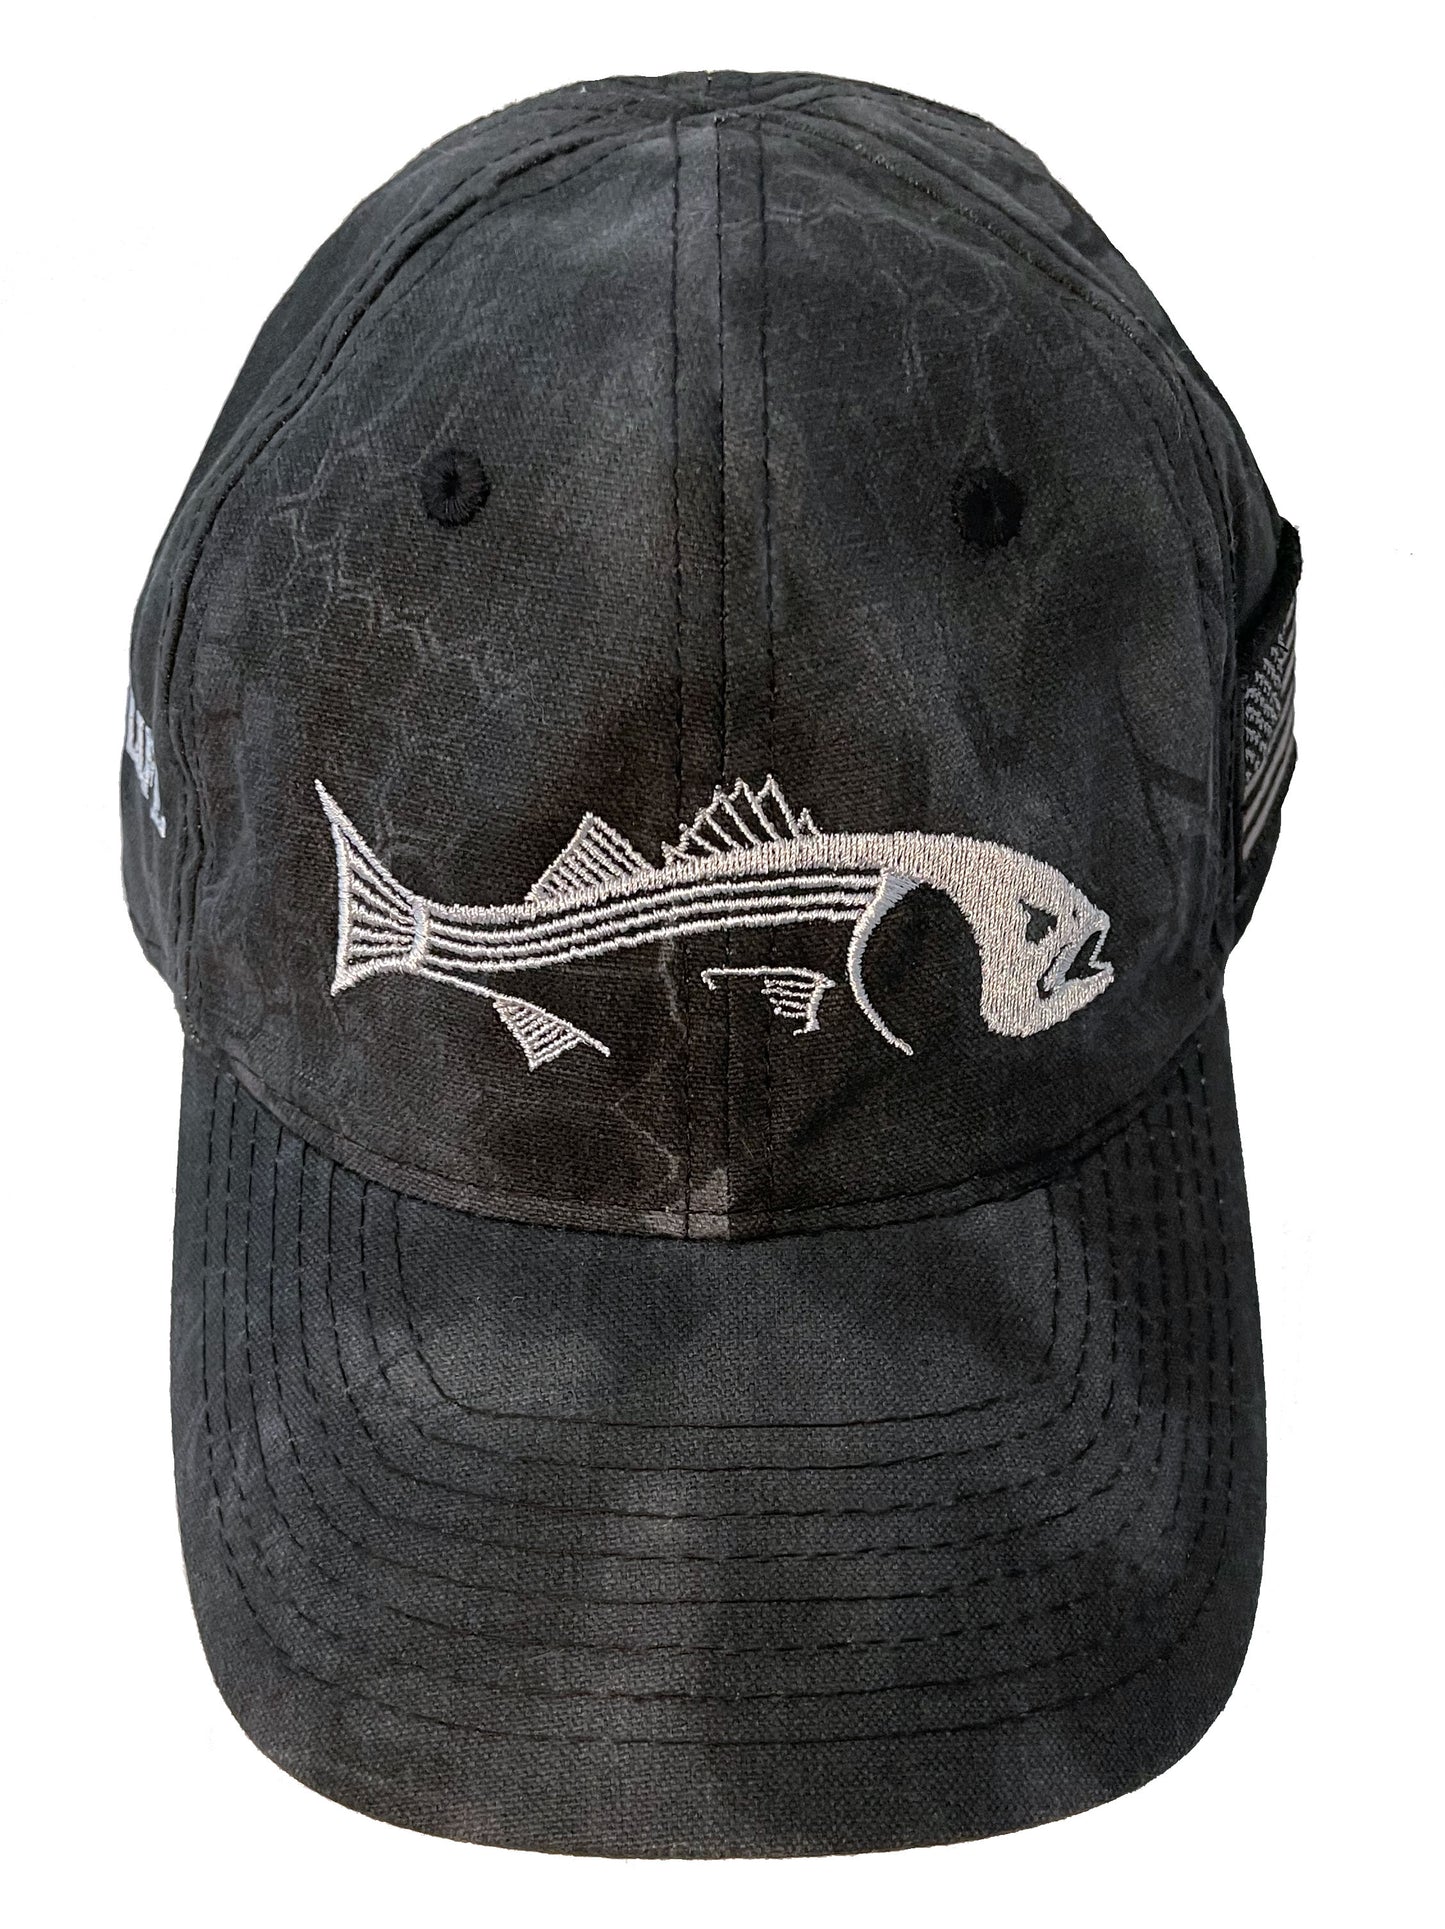 Striped Bass Kryptek Black Camo Striper Fishing Hat